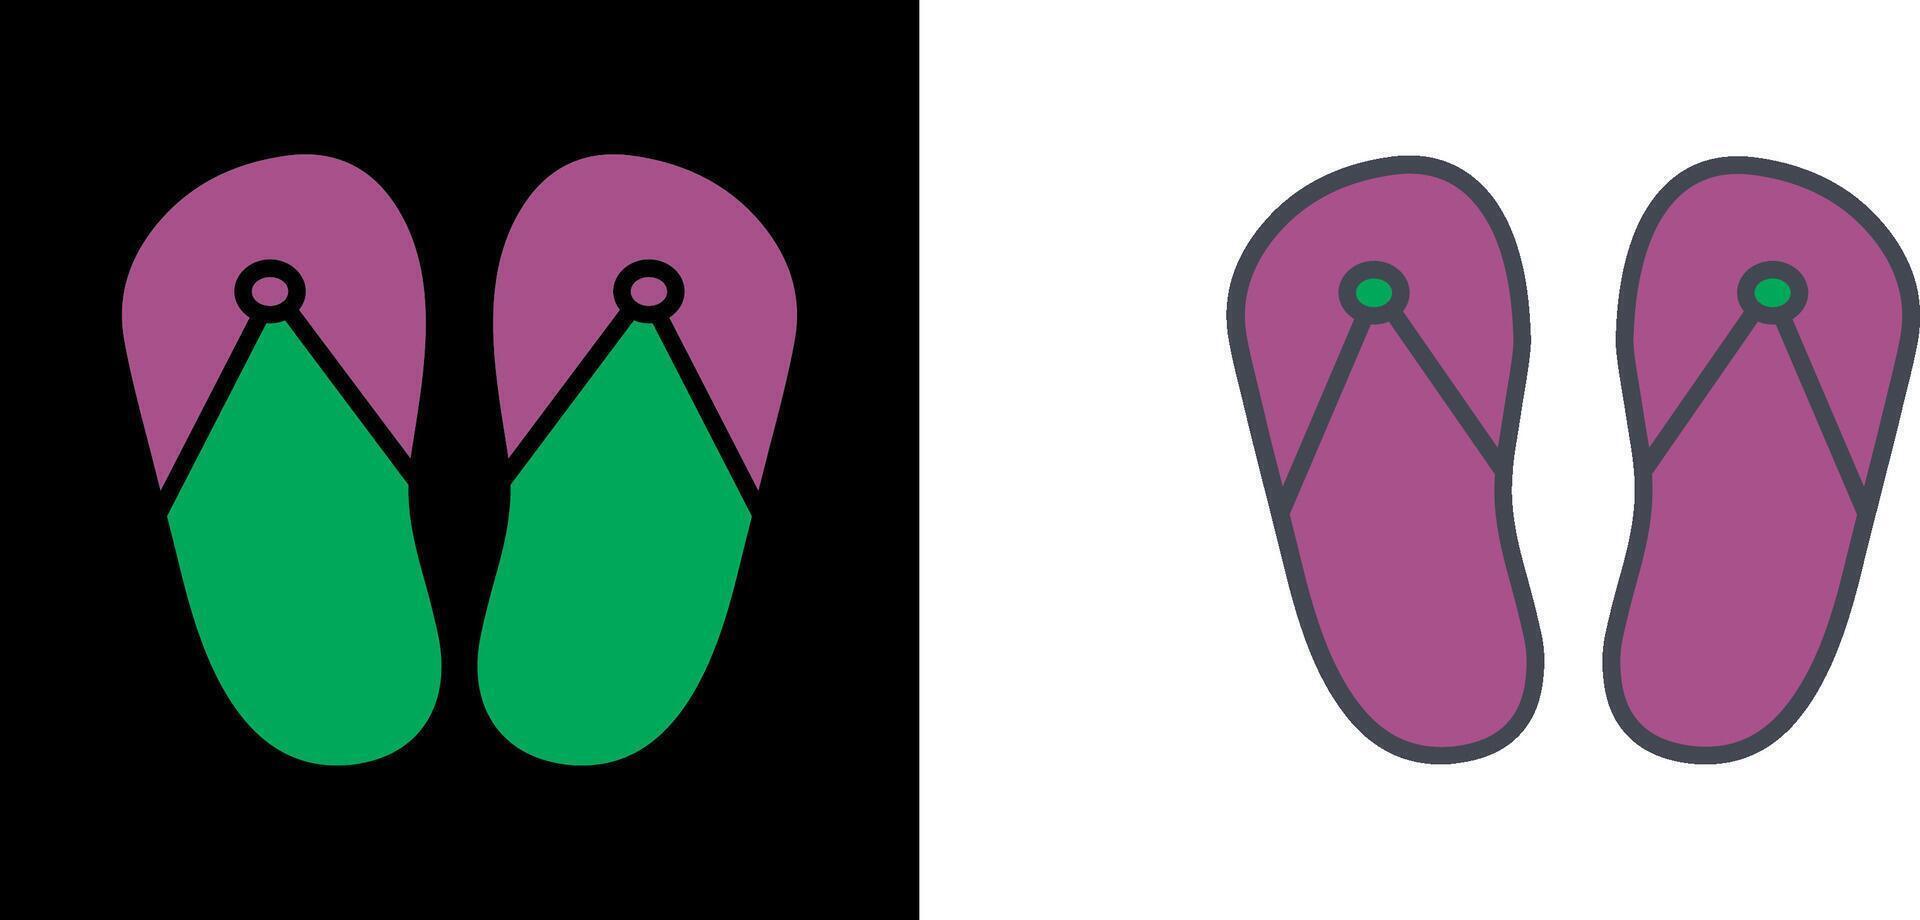 Slippers Icon Design vector